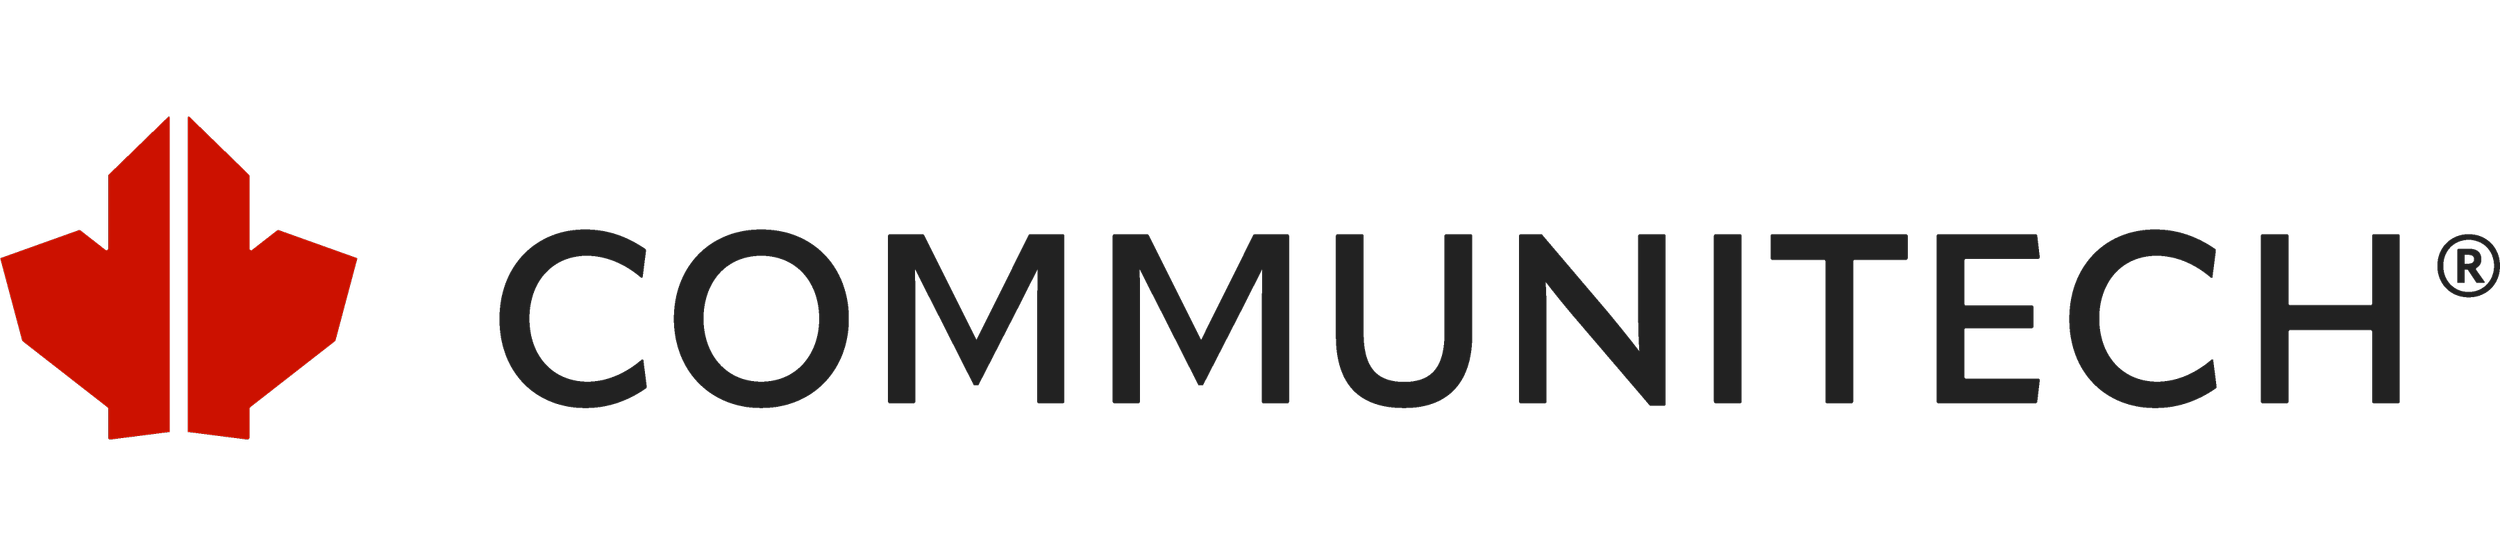 communitech_logo-horiz.png